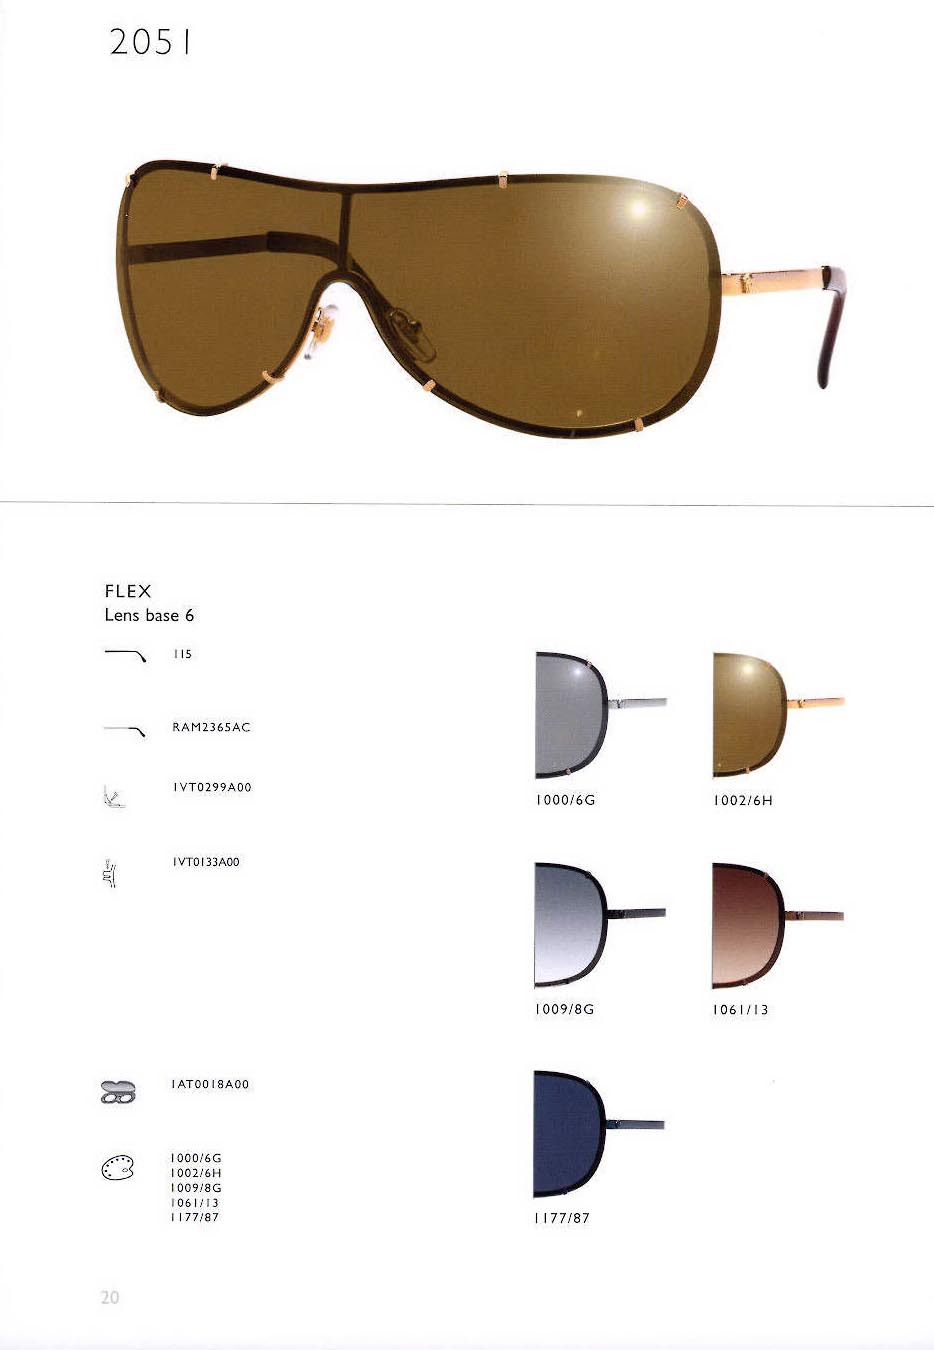 Sunglasses Versace 2051 106113